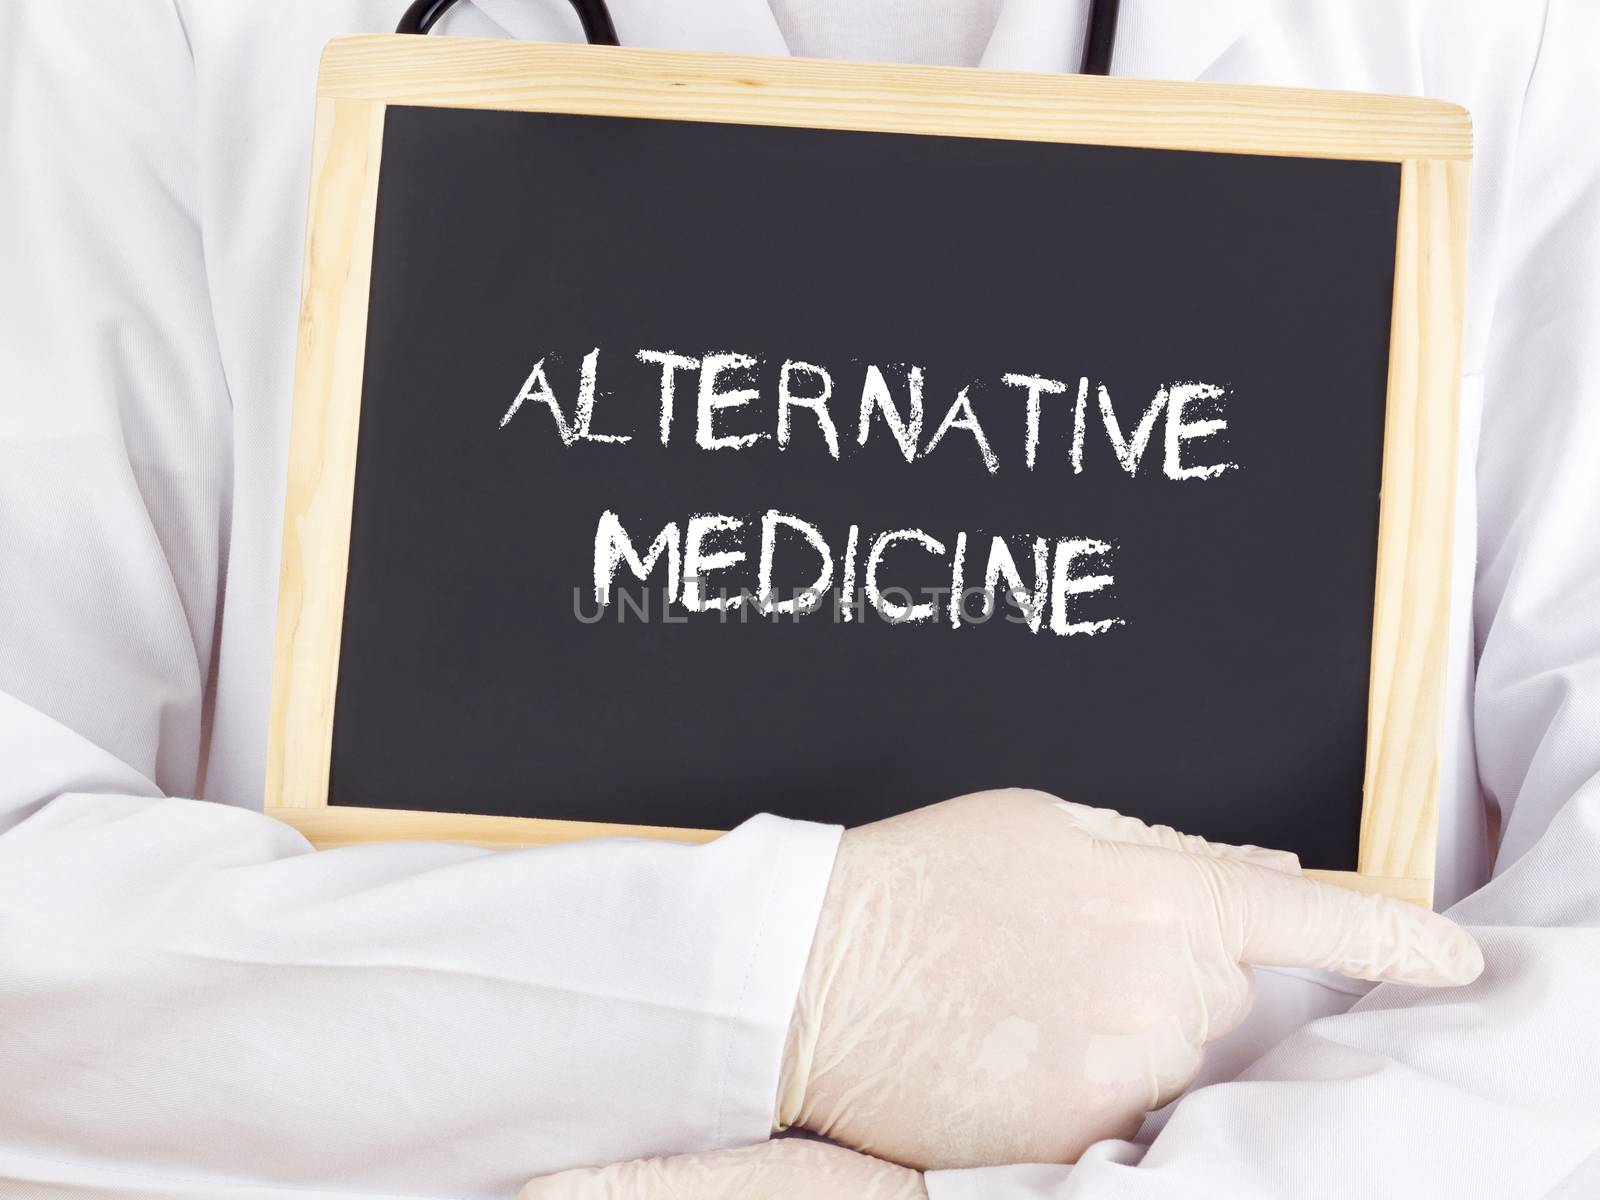 Doctor shows information on blackboard: alternative medicine